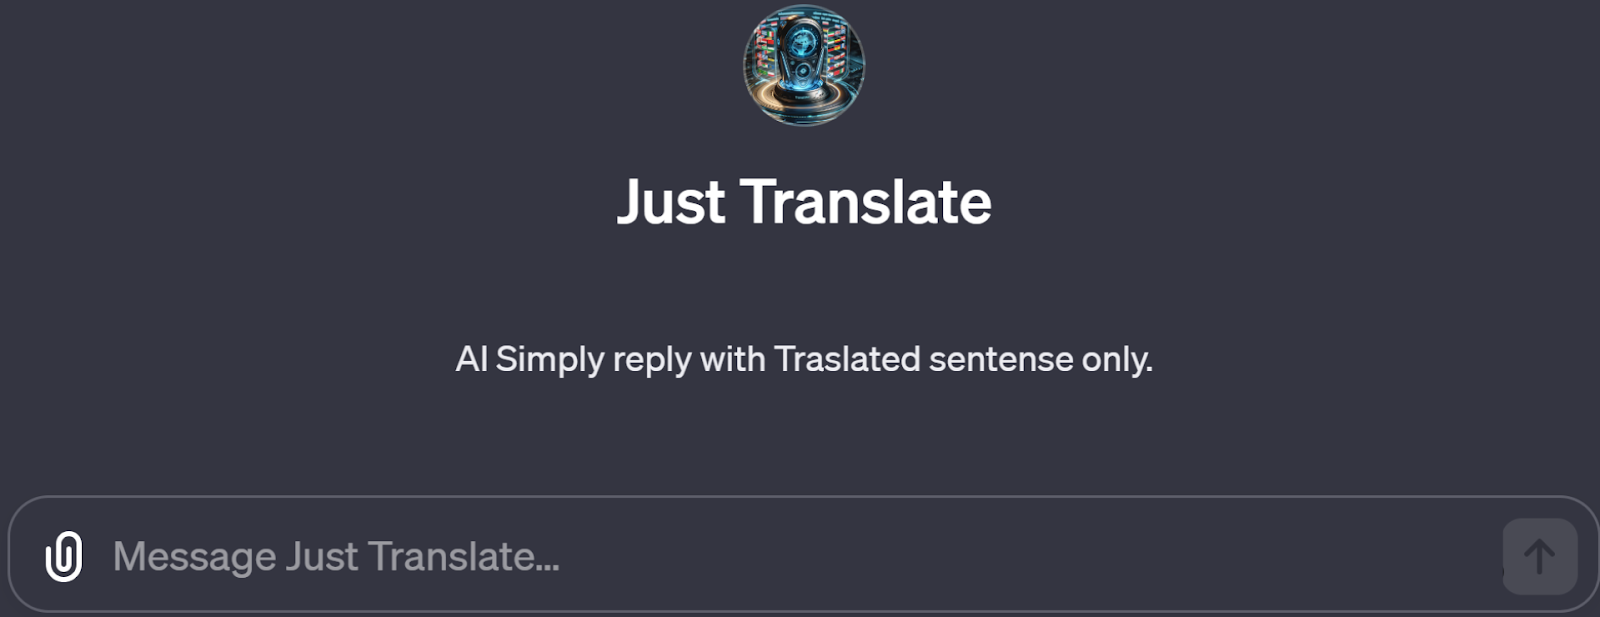 Just Translate GPT